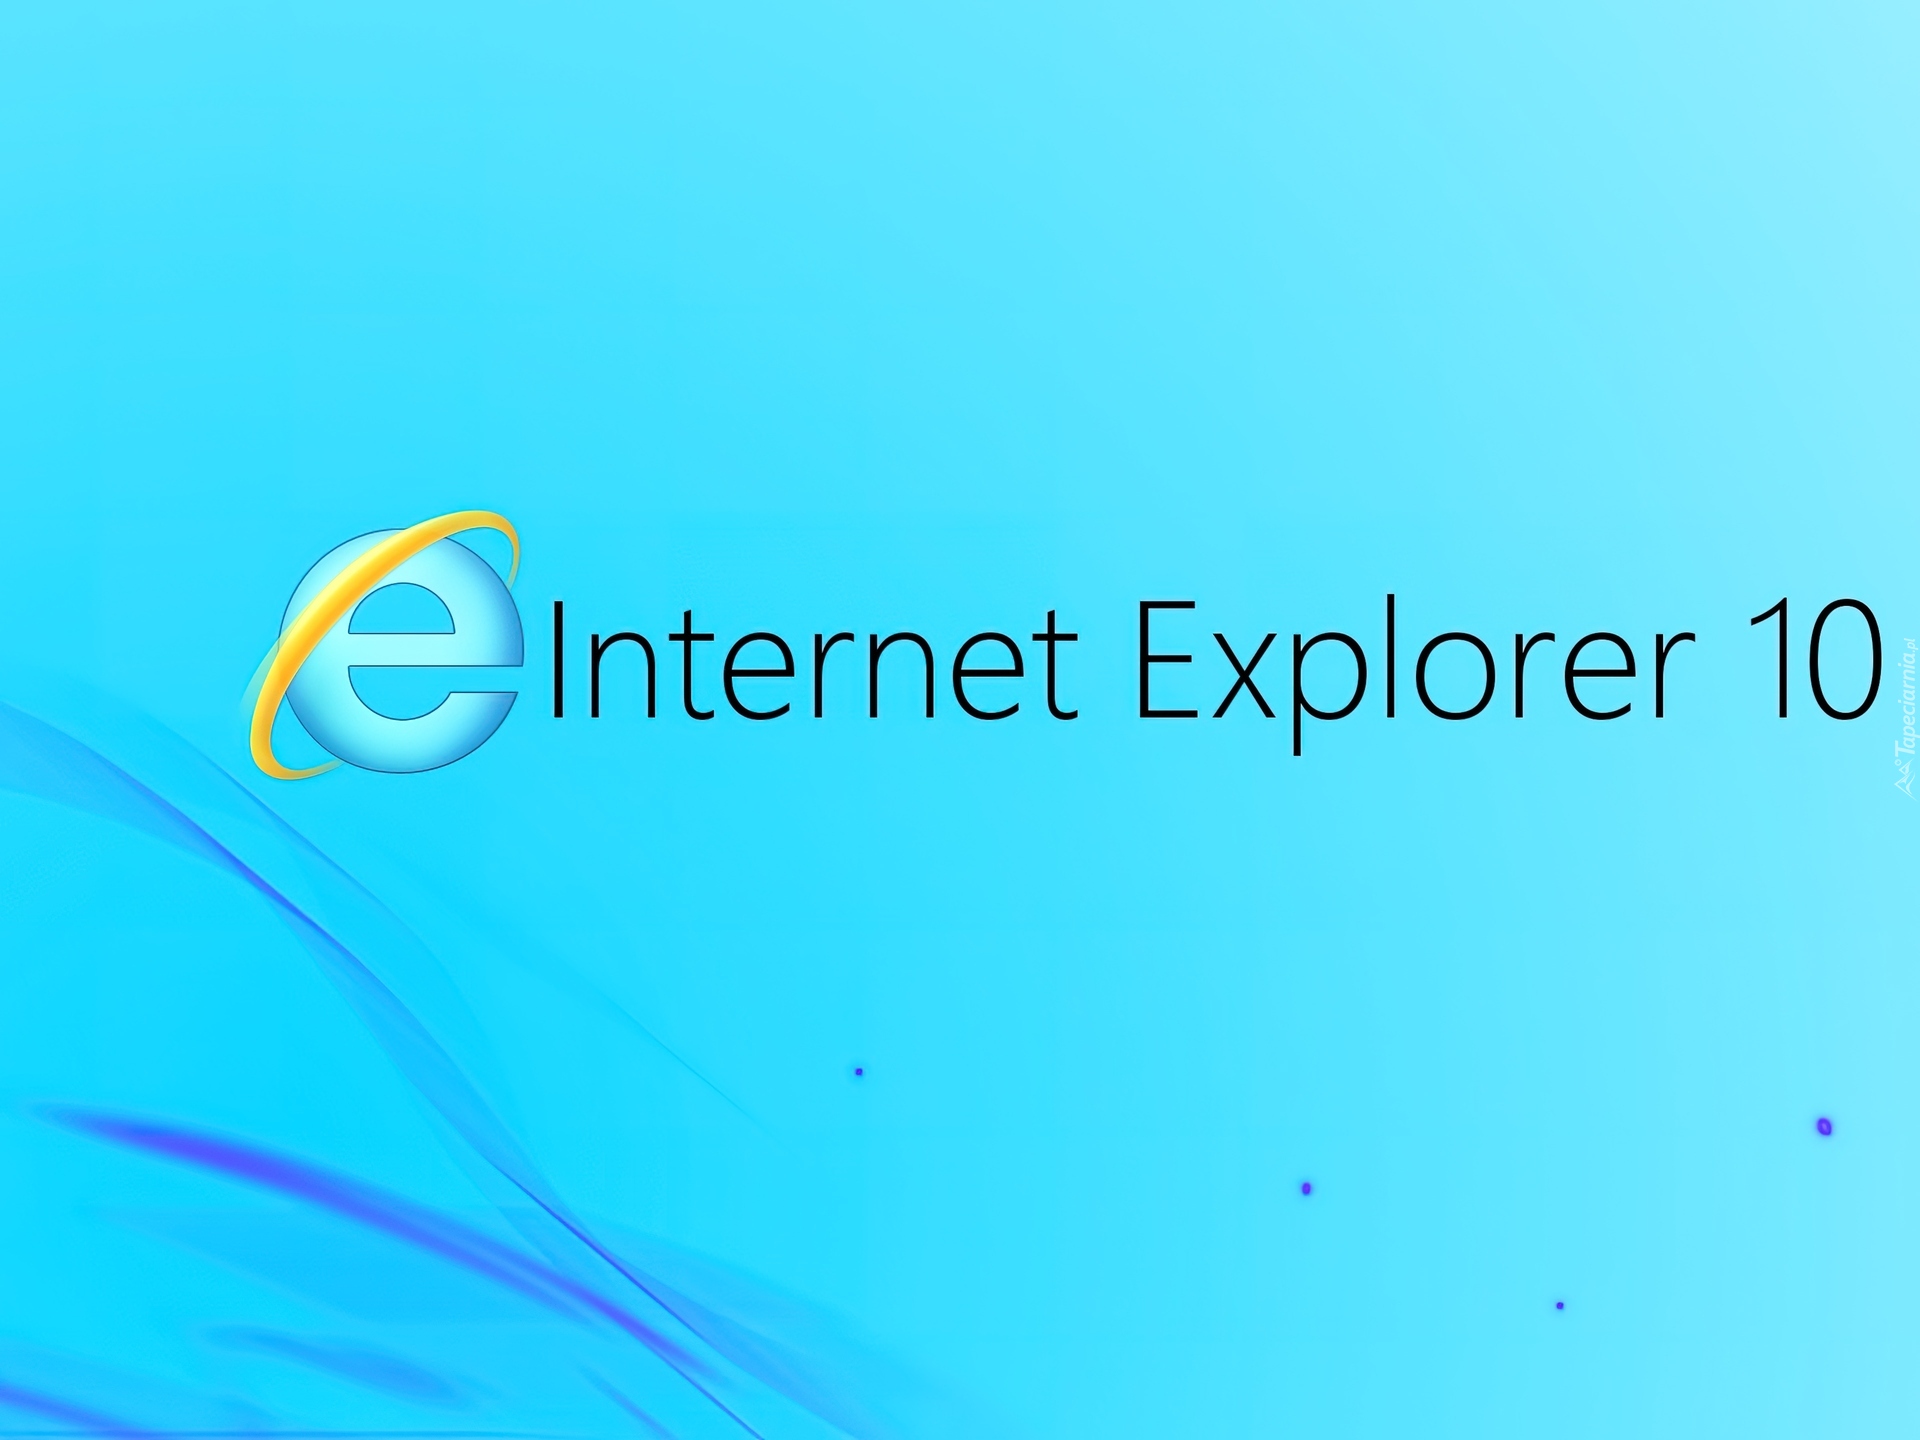 Браузера microsoft internet explorer. Internet Explorer. Internet Explorer 10. Internet Explorer браузер. Интернет эксплорер 10.